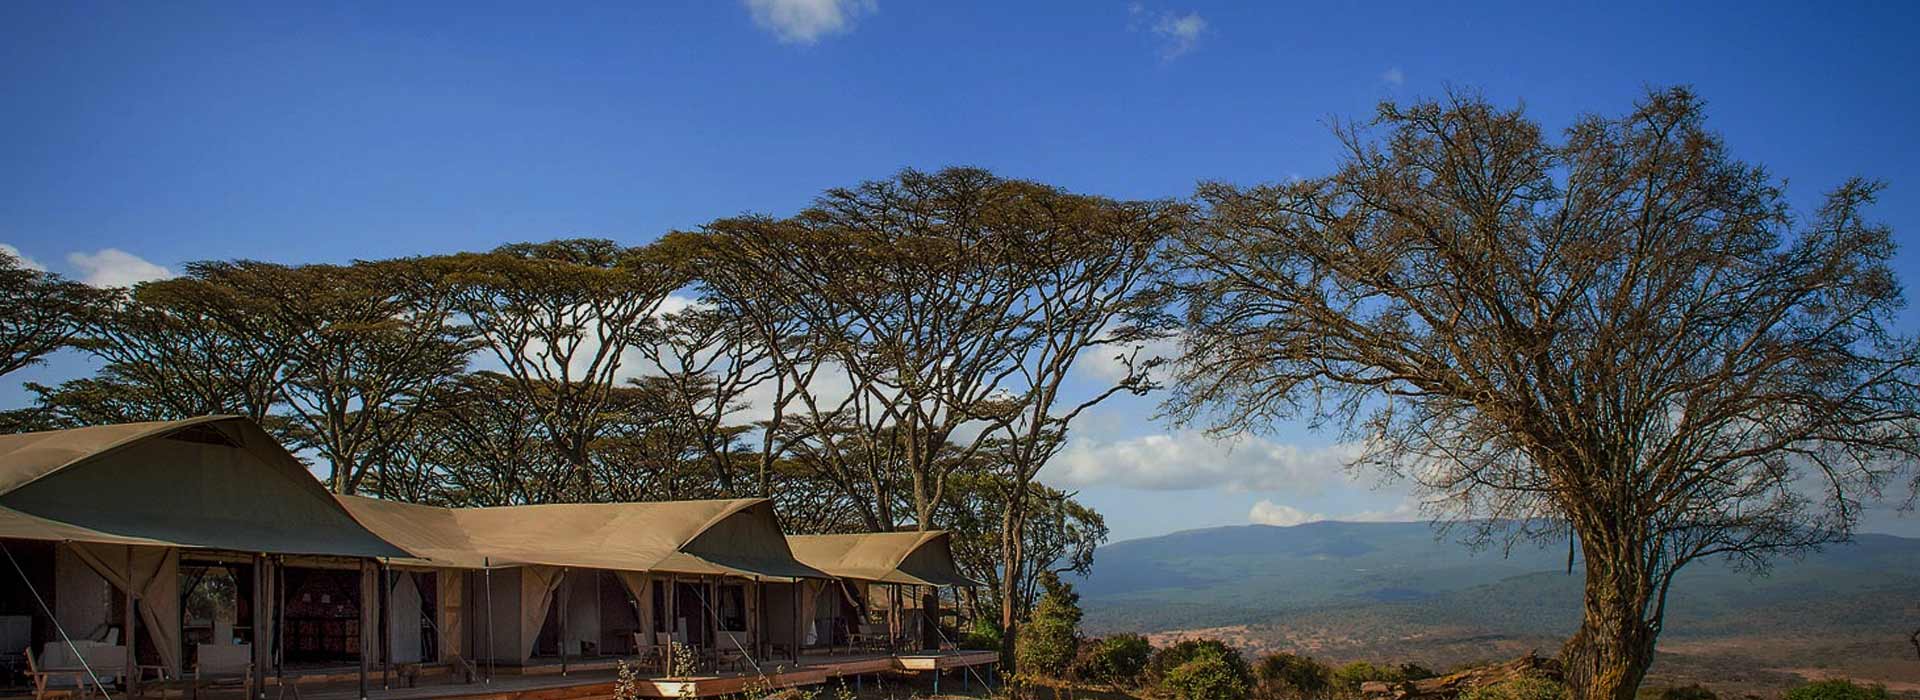 Budget Camping Safaris in Tanzania